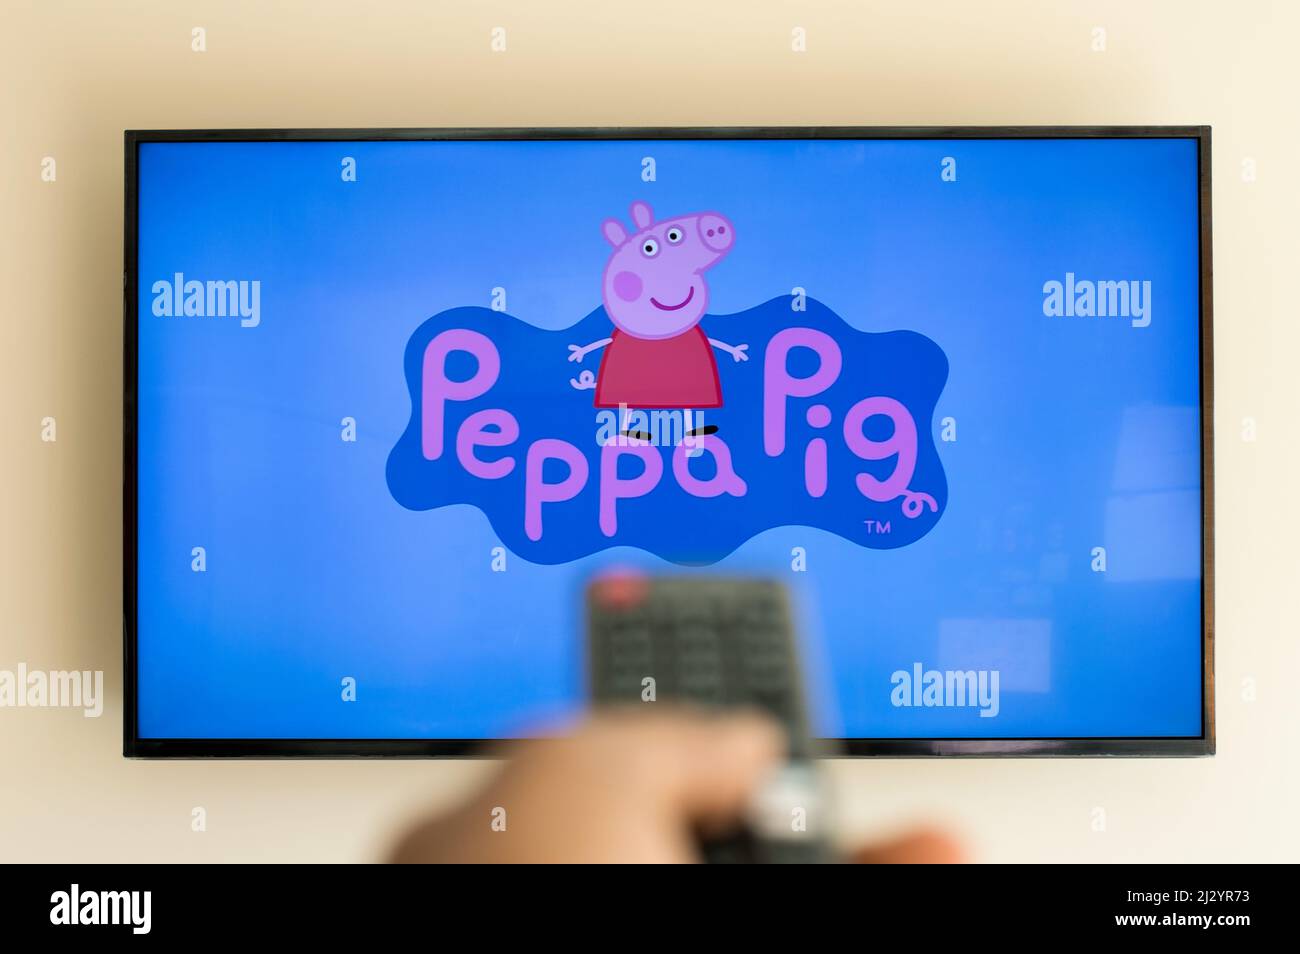 Peppa Pig cartoon on Tele Stock Photo